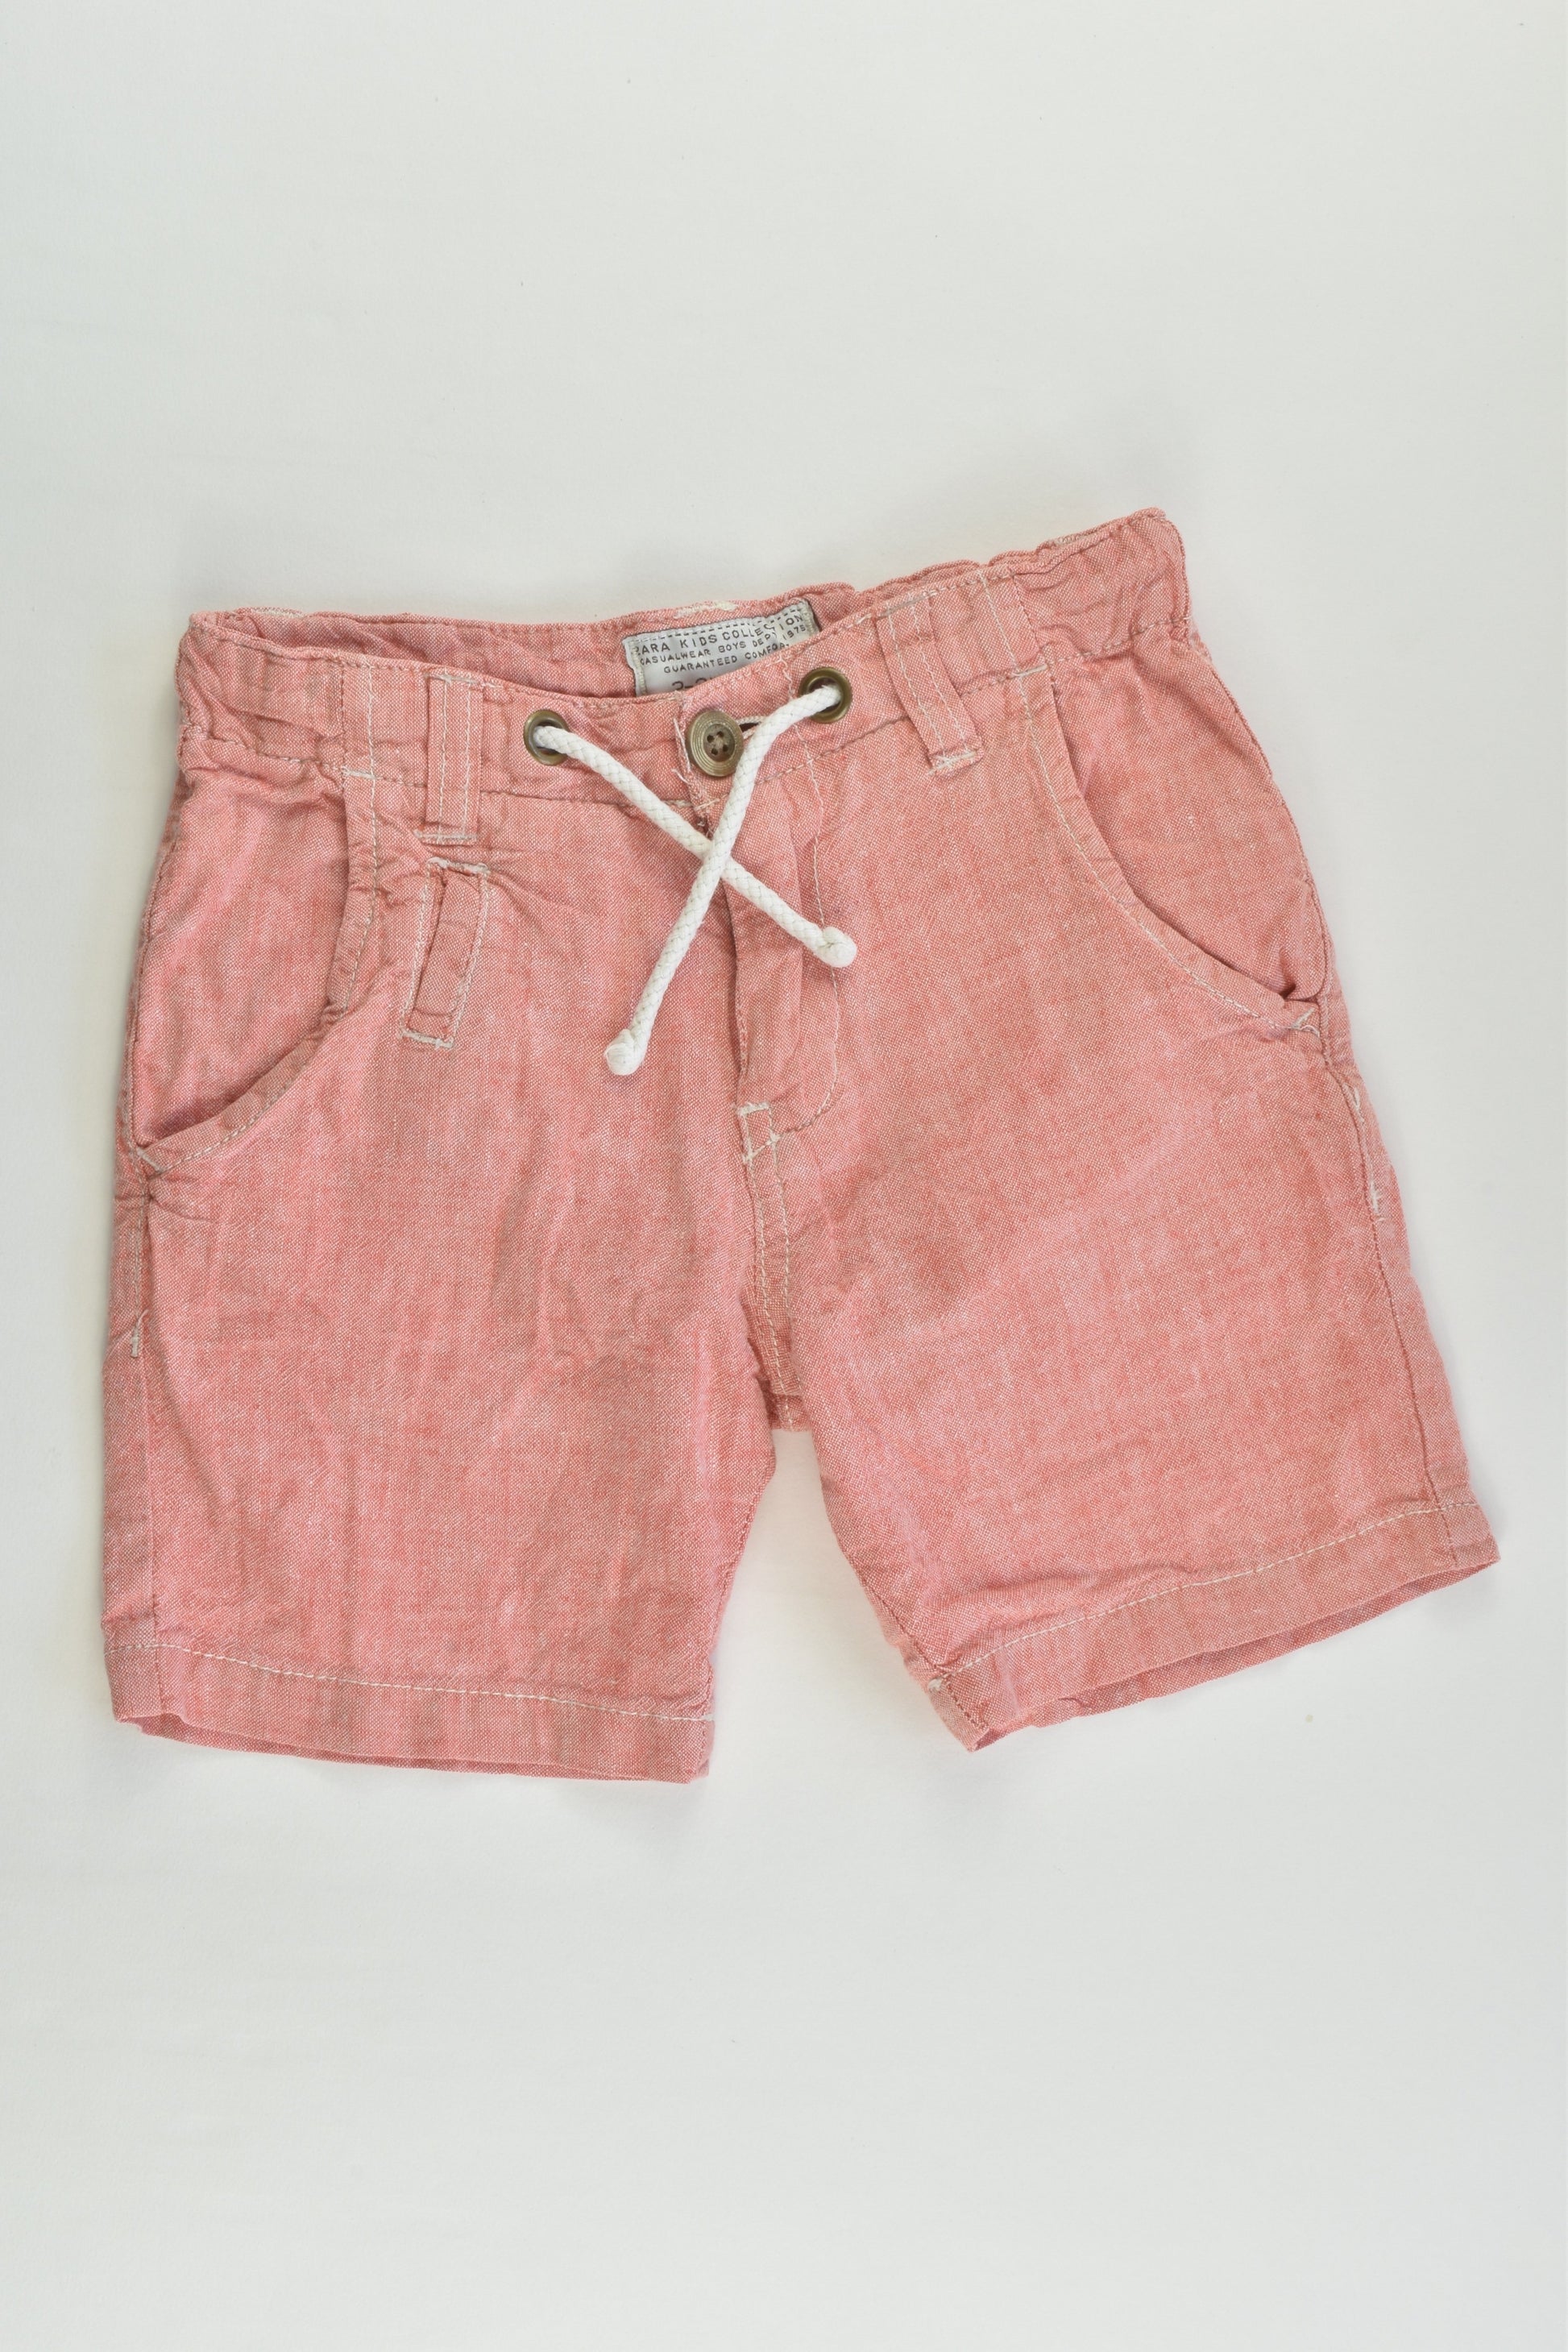 Zara Size 2-3 (98 cm) Linen/Cotton Shorts